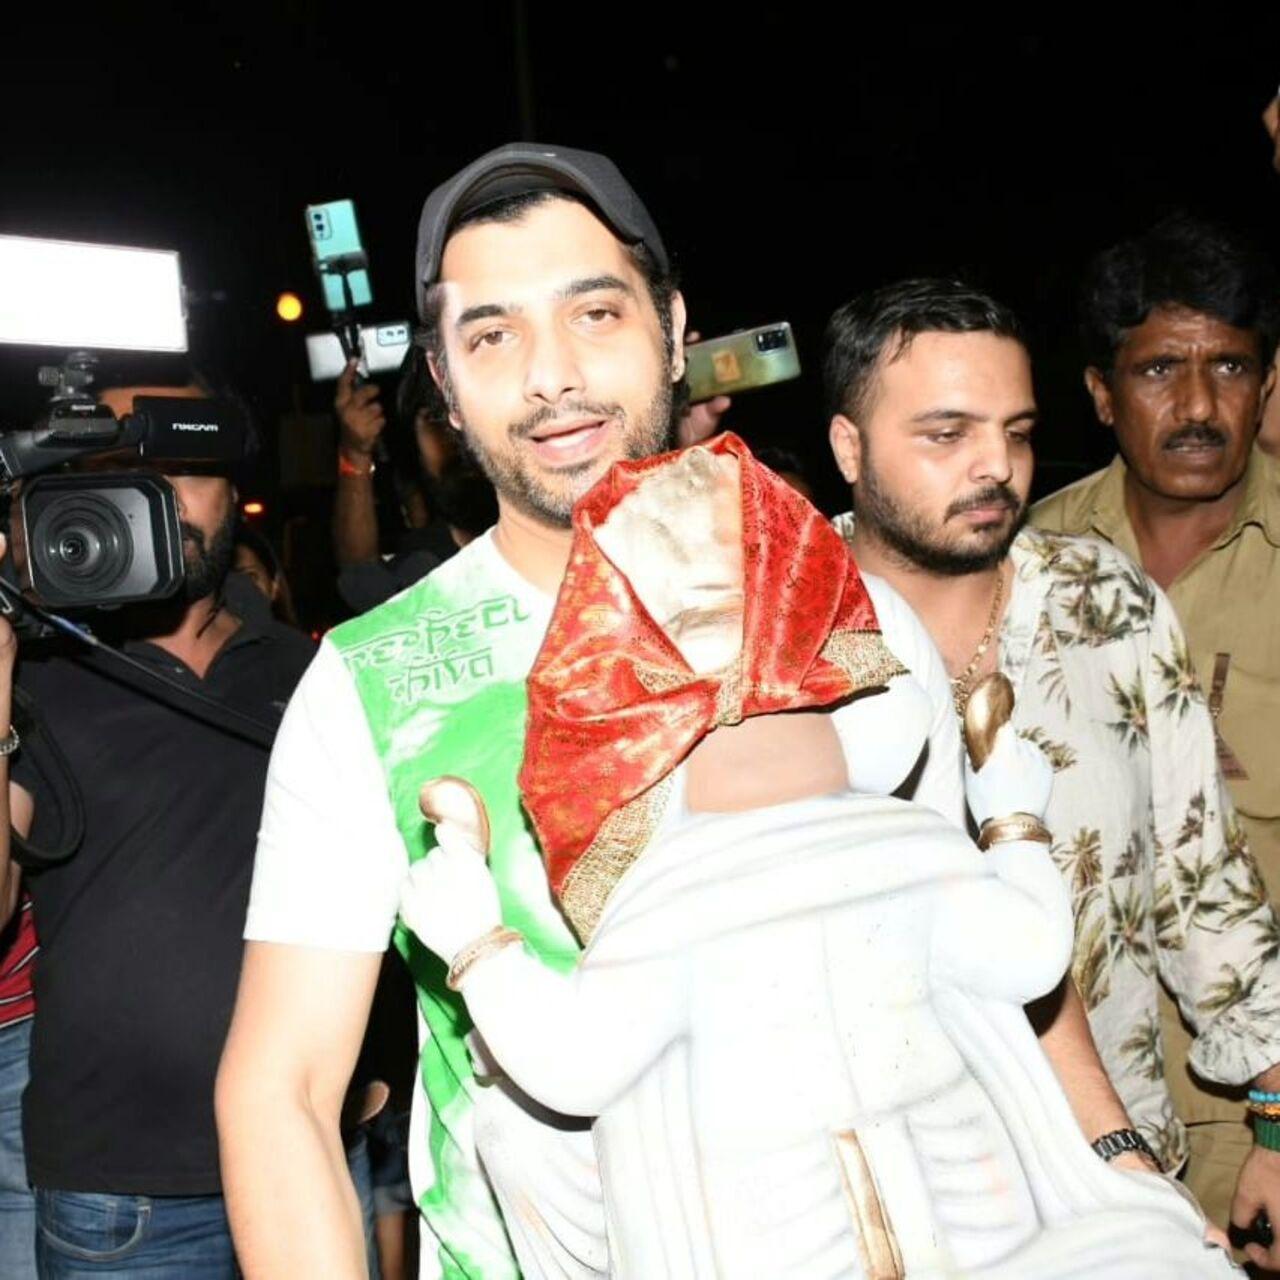 Sharad Malhotra was also seen bringing home Lord Ganesha